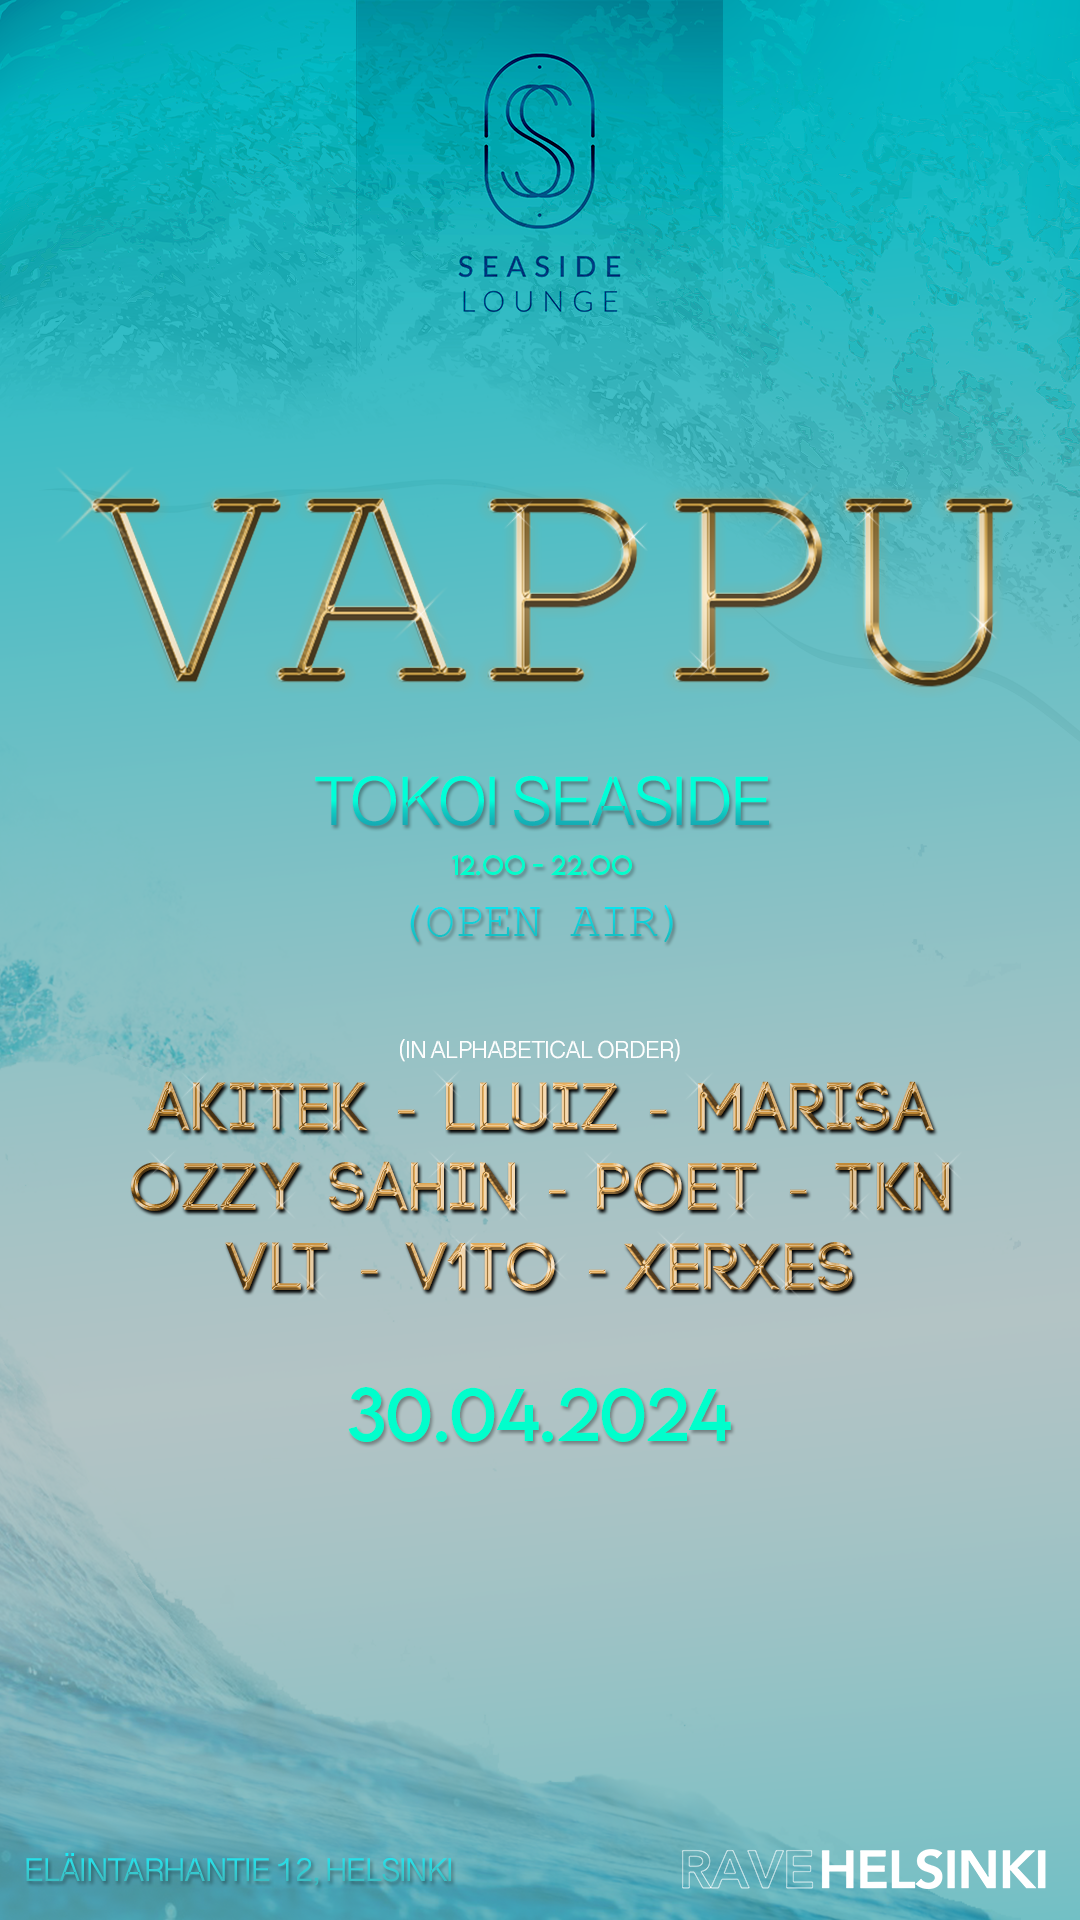 VAPPU 2024 (OPEN AIR) AT TOKOI SEASIDE - フライヤー裏